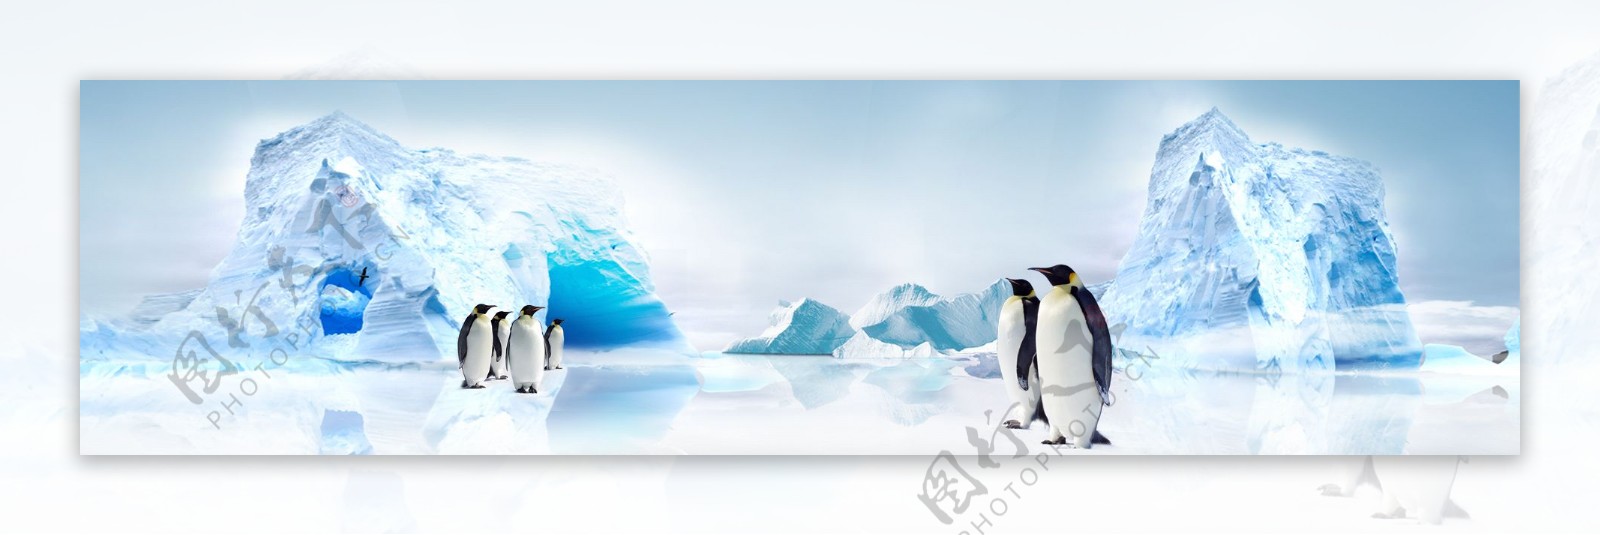 冬季蓝色冰山企鹅淘宝全屏banner背景